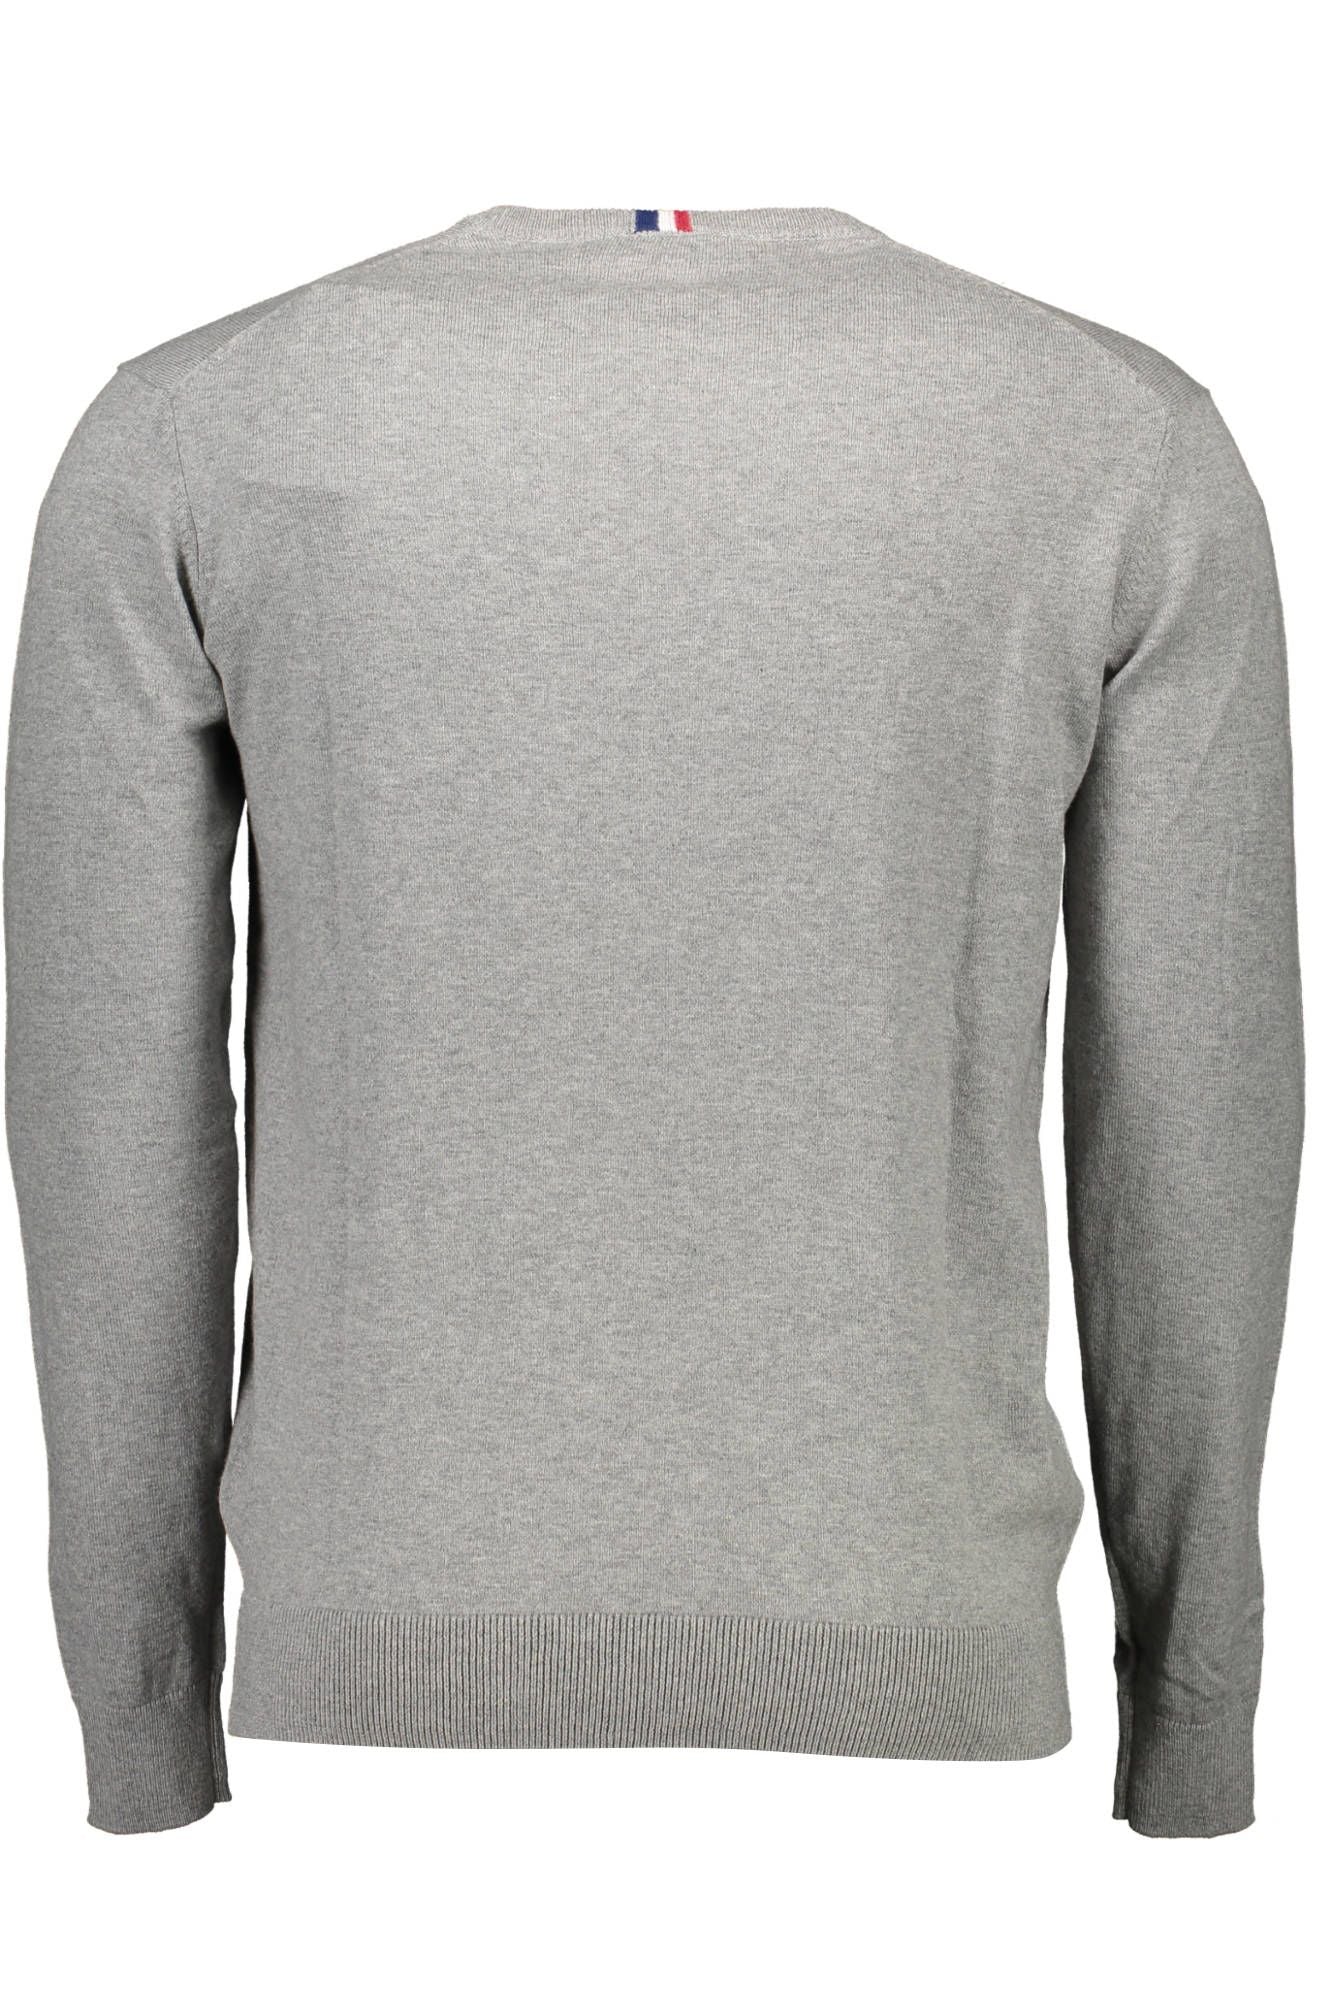 U.S. POLO ASSN. Elegant Gray Cotton-Cashmere Sweater for Men